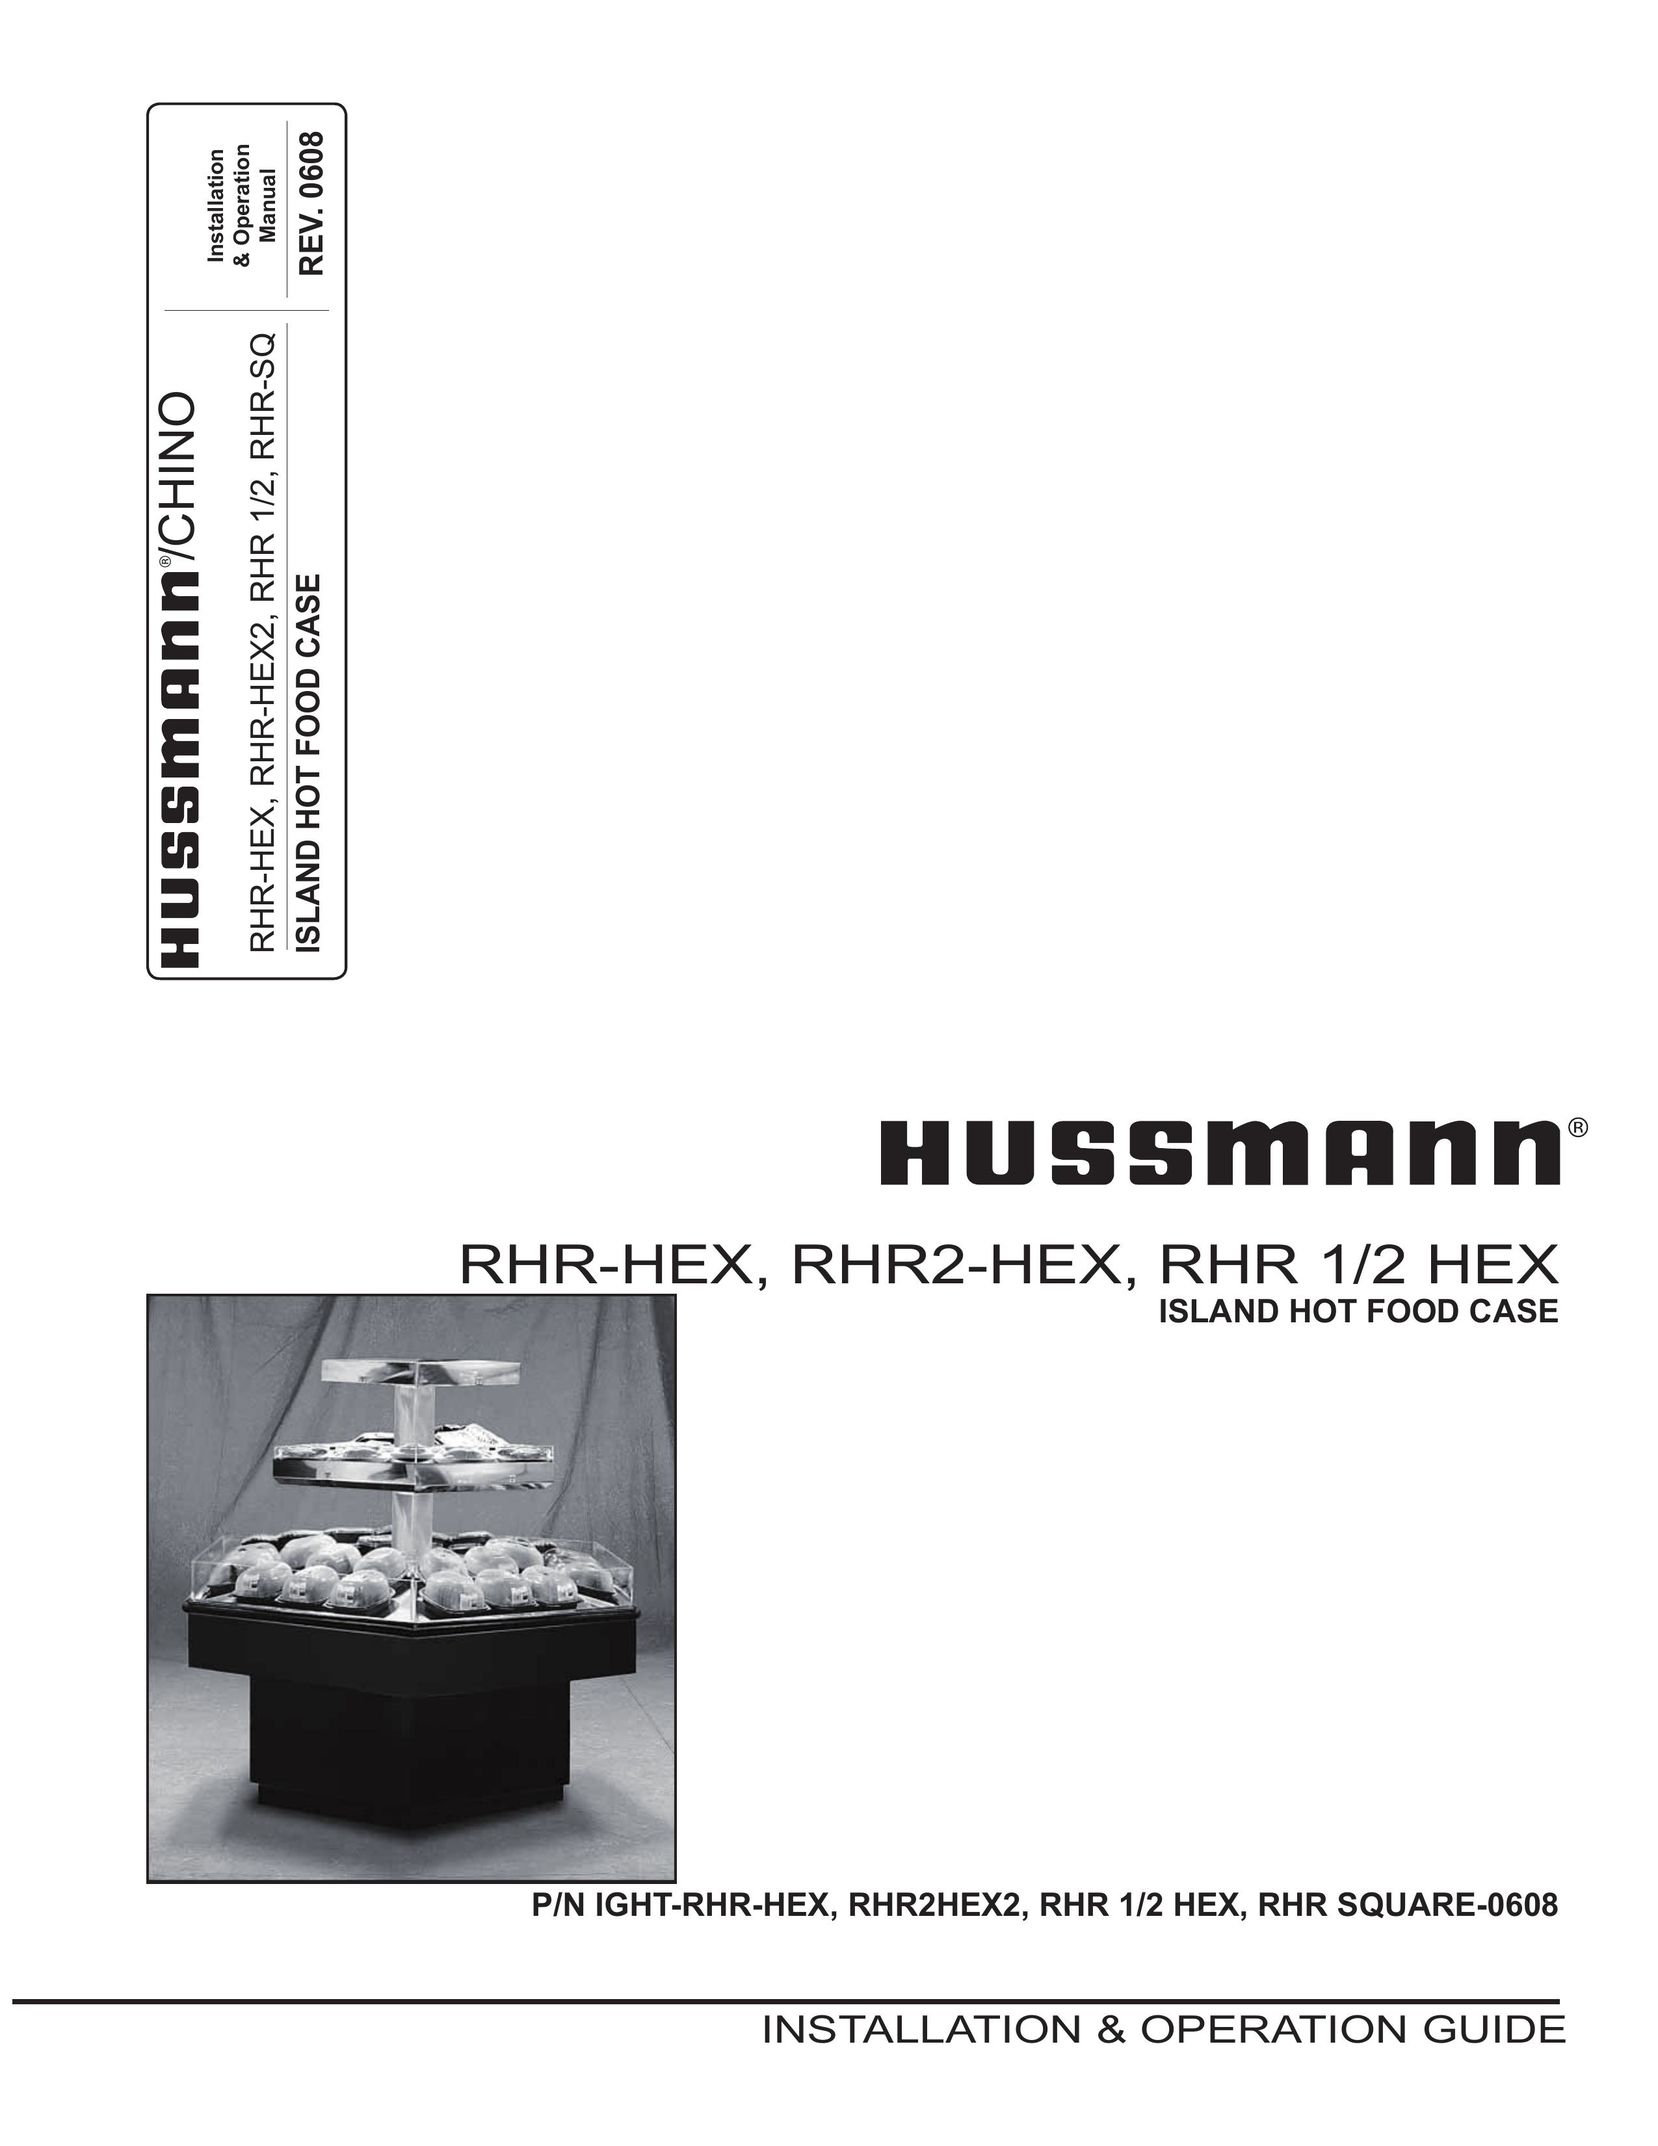 hussman RHR-HEX Food Warmer User Manual